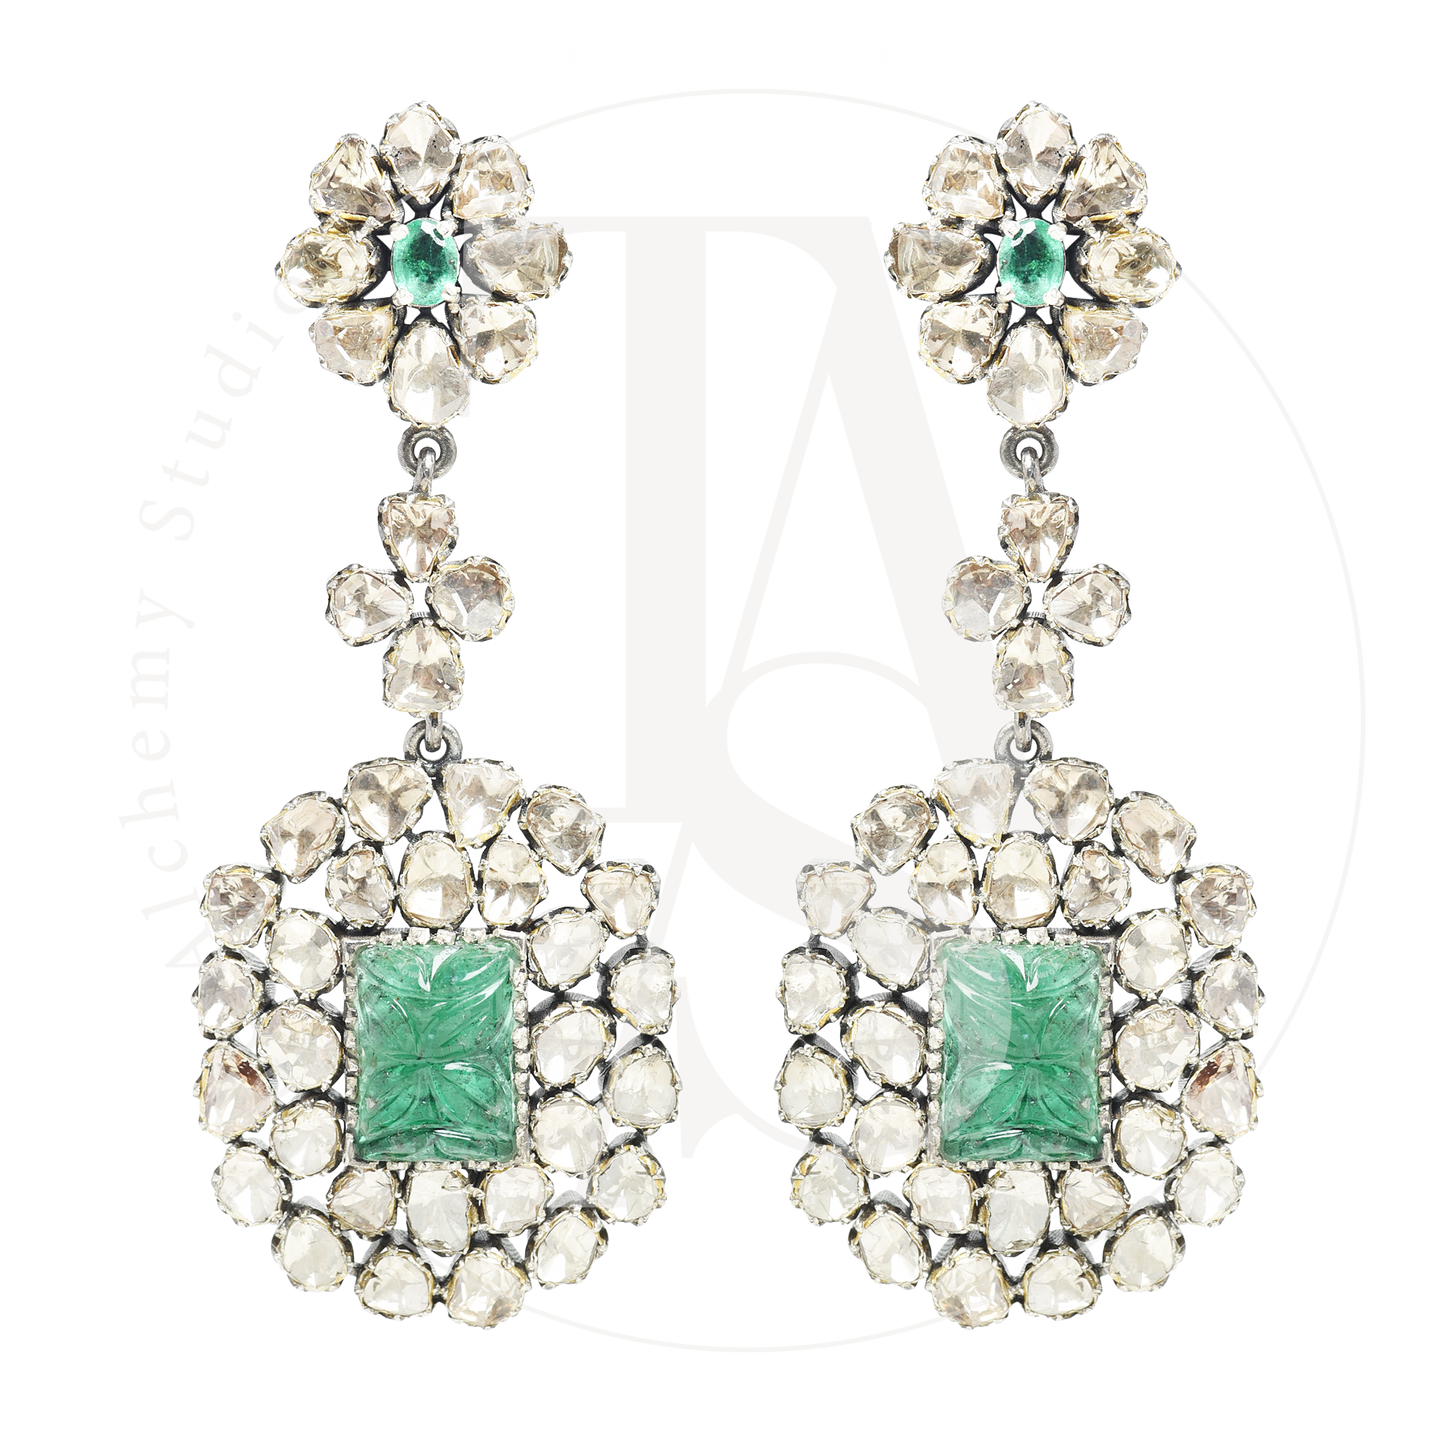 Empress Emerald and Uncut Diamond Earrings